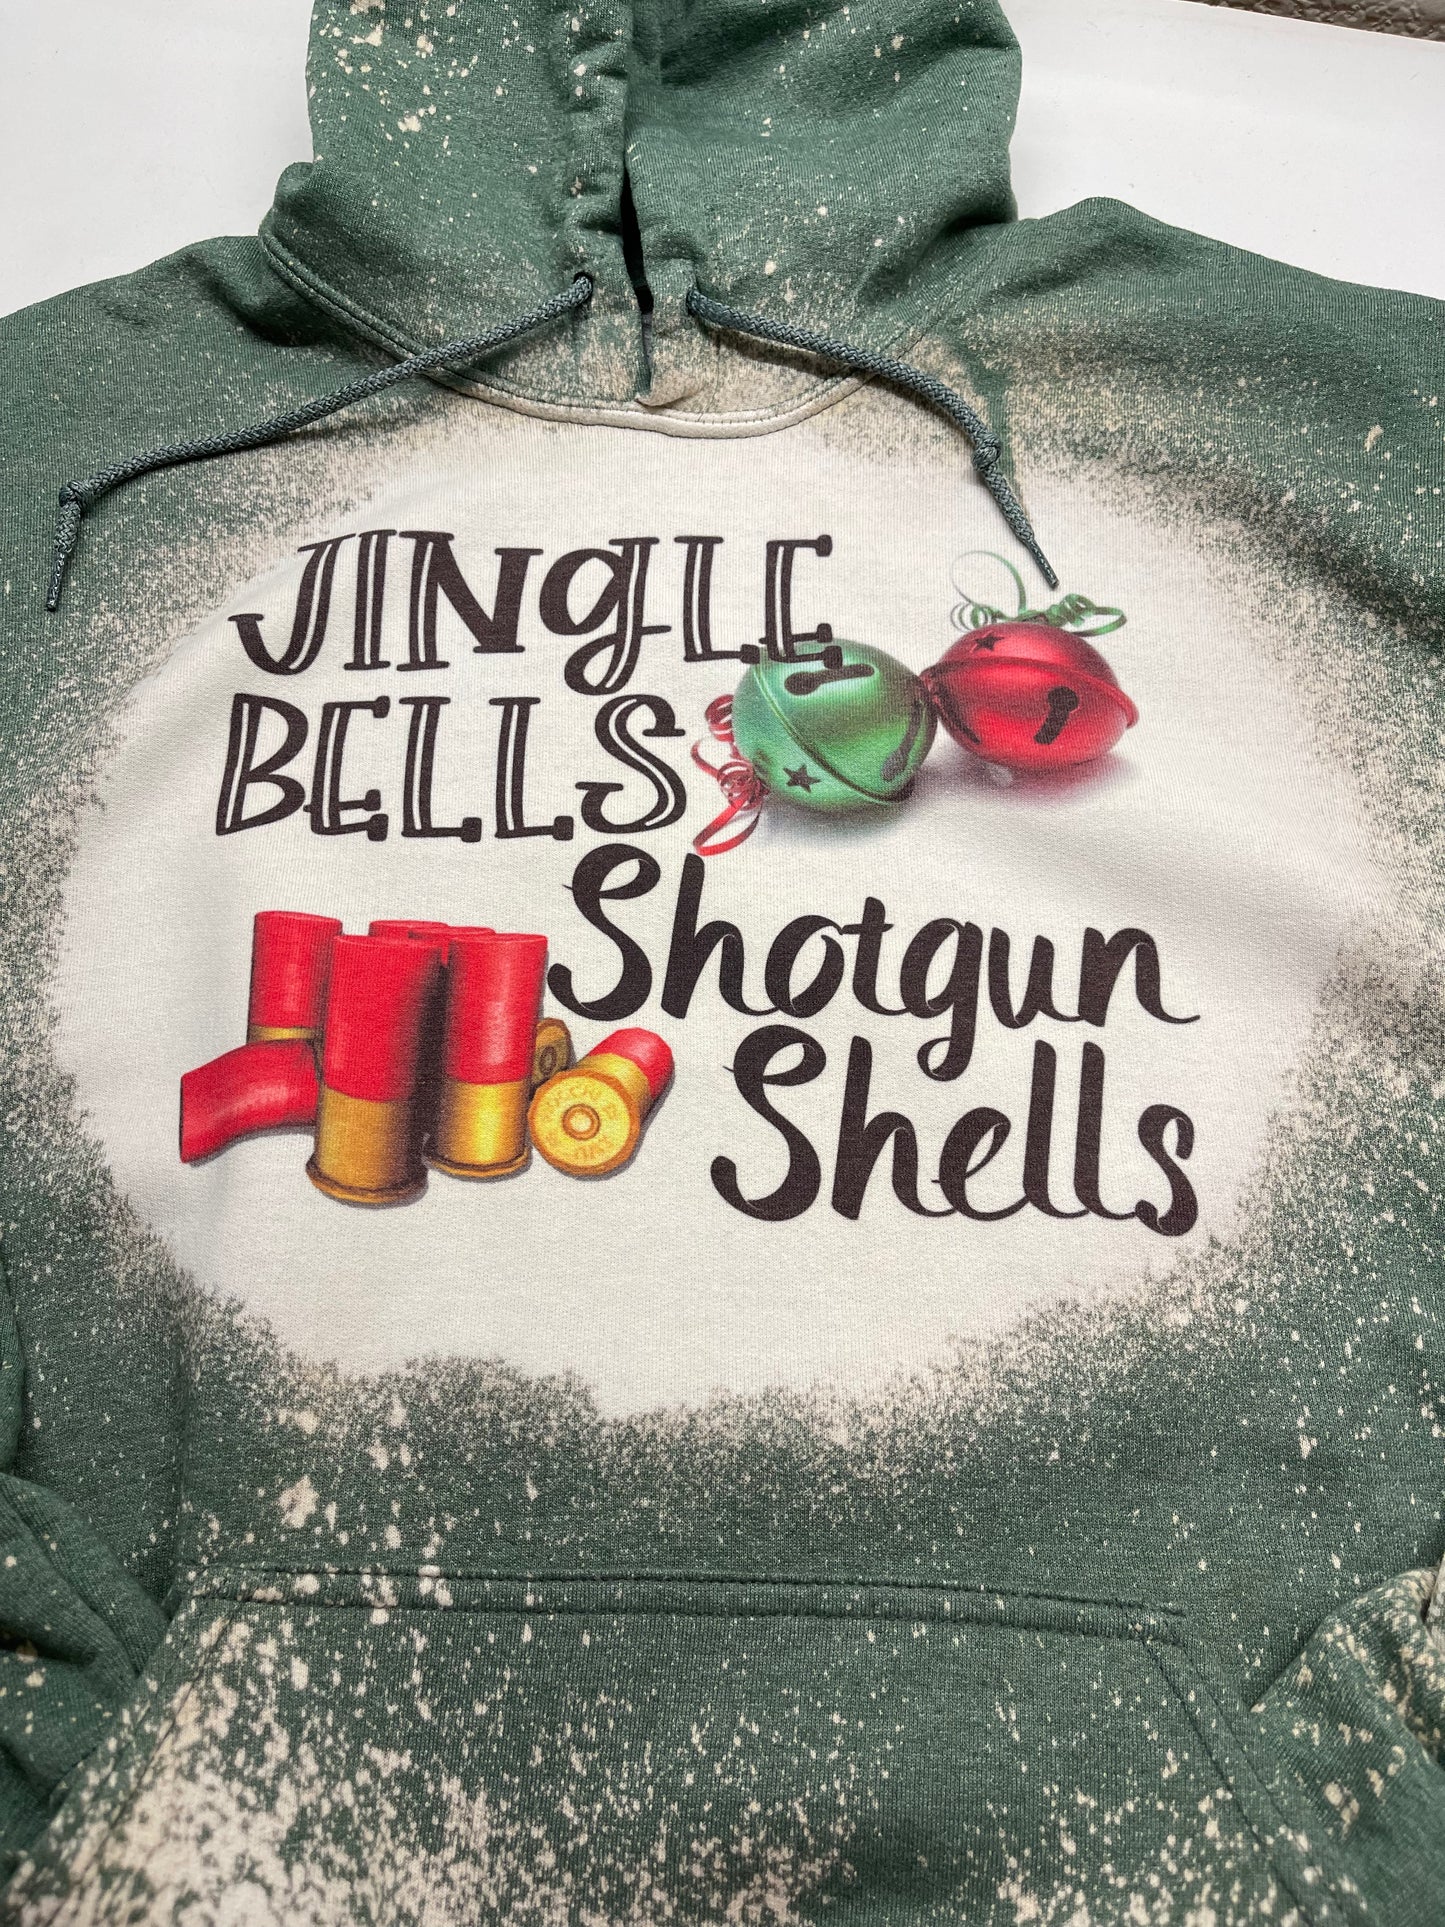 Jingle bells shotgun shells